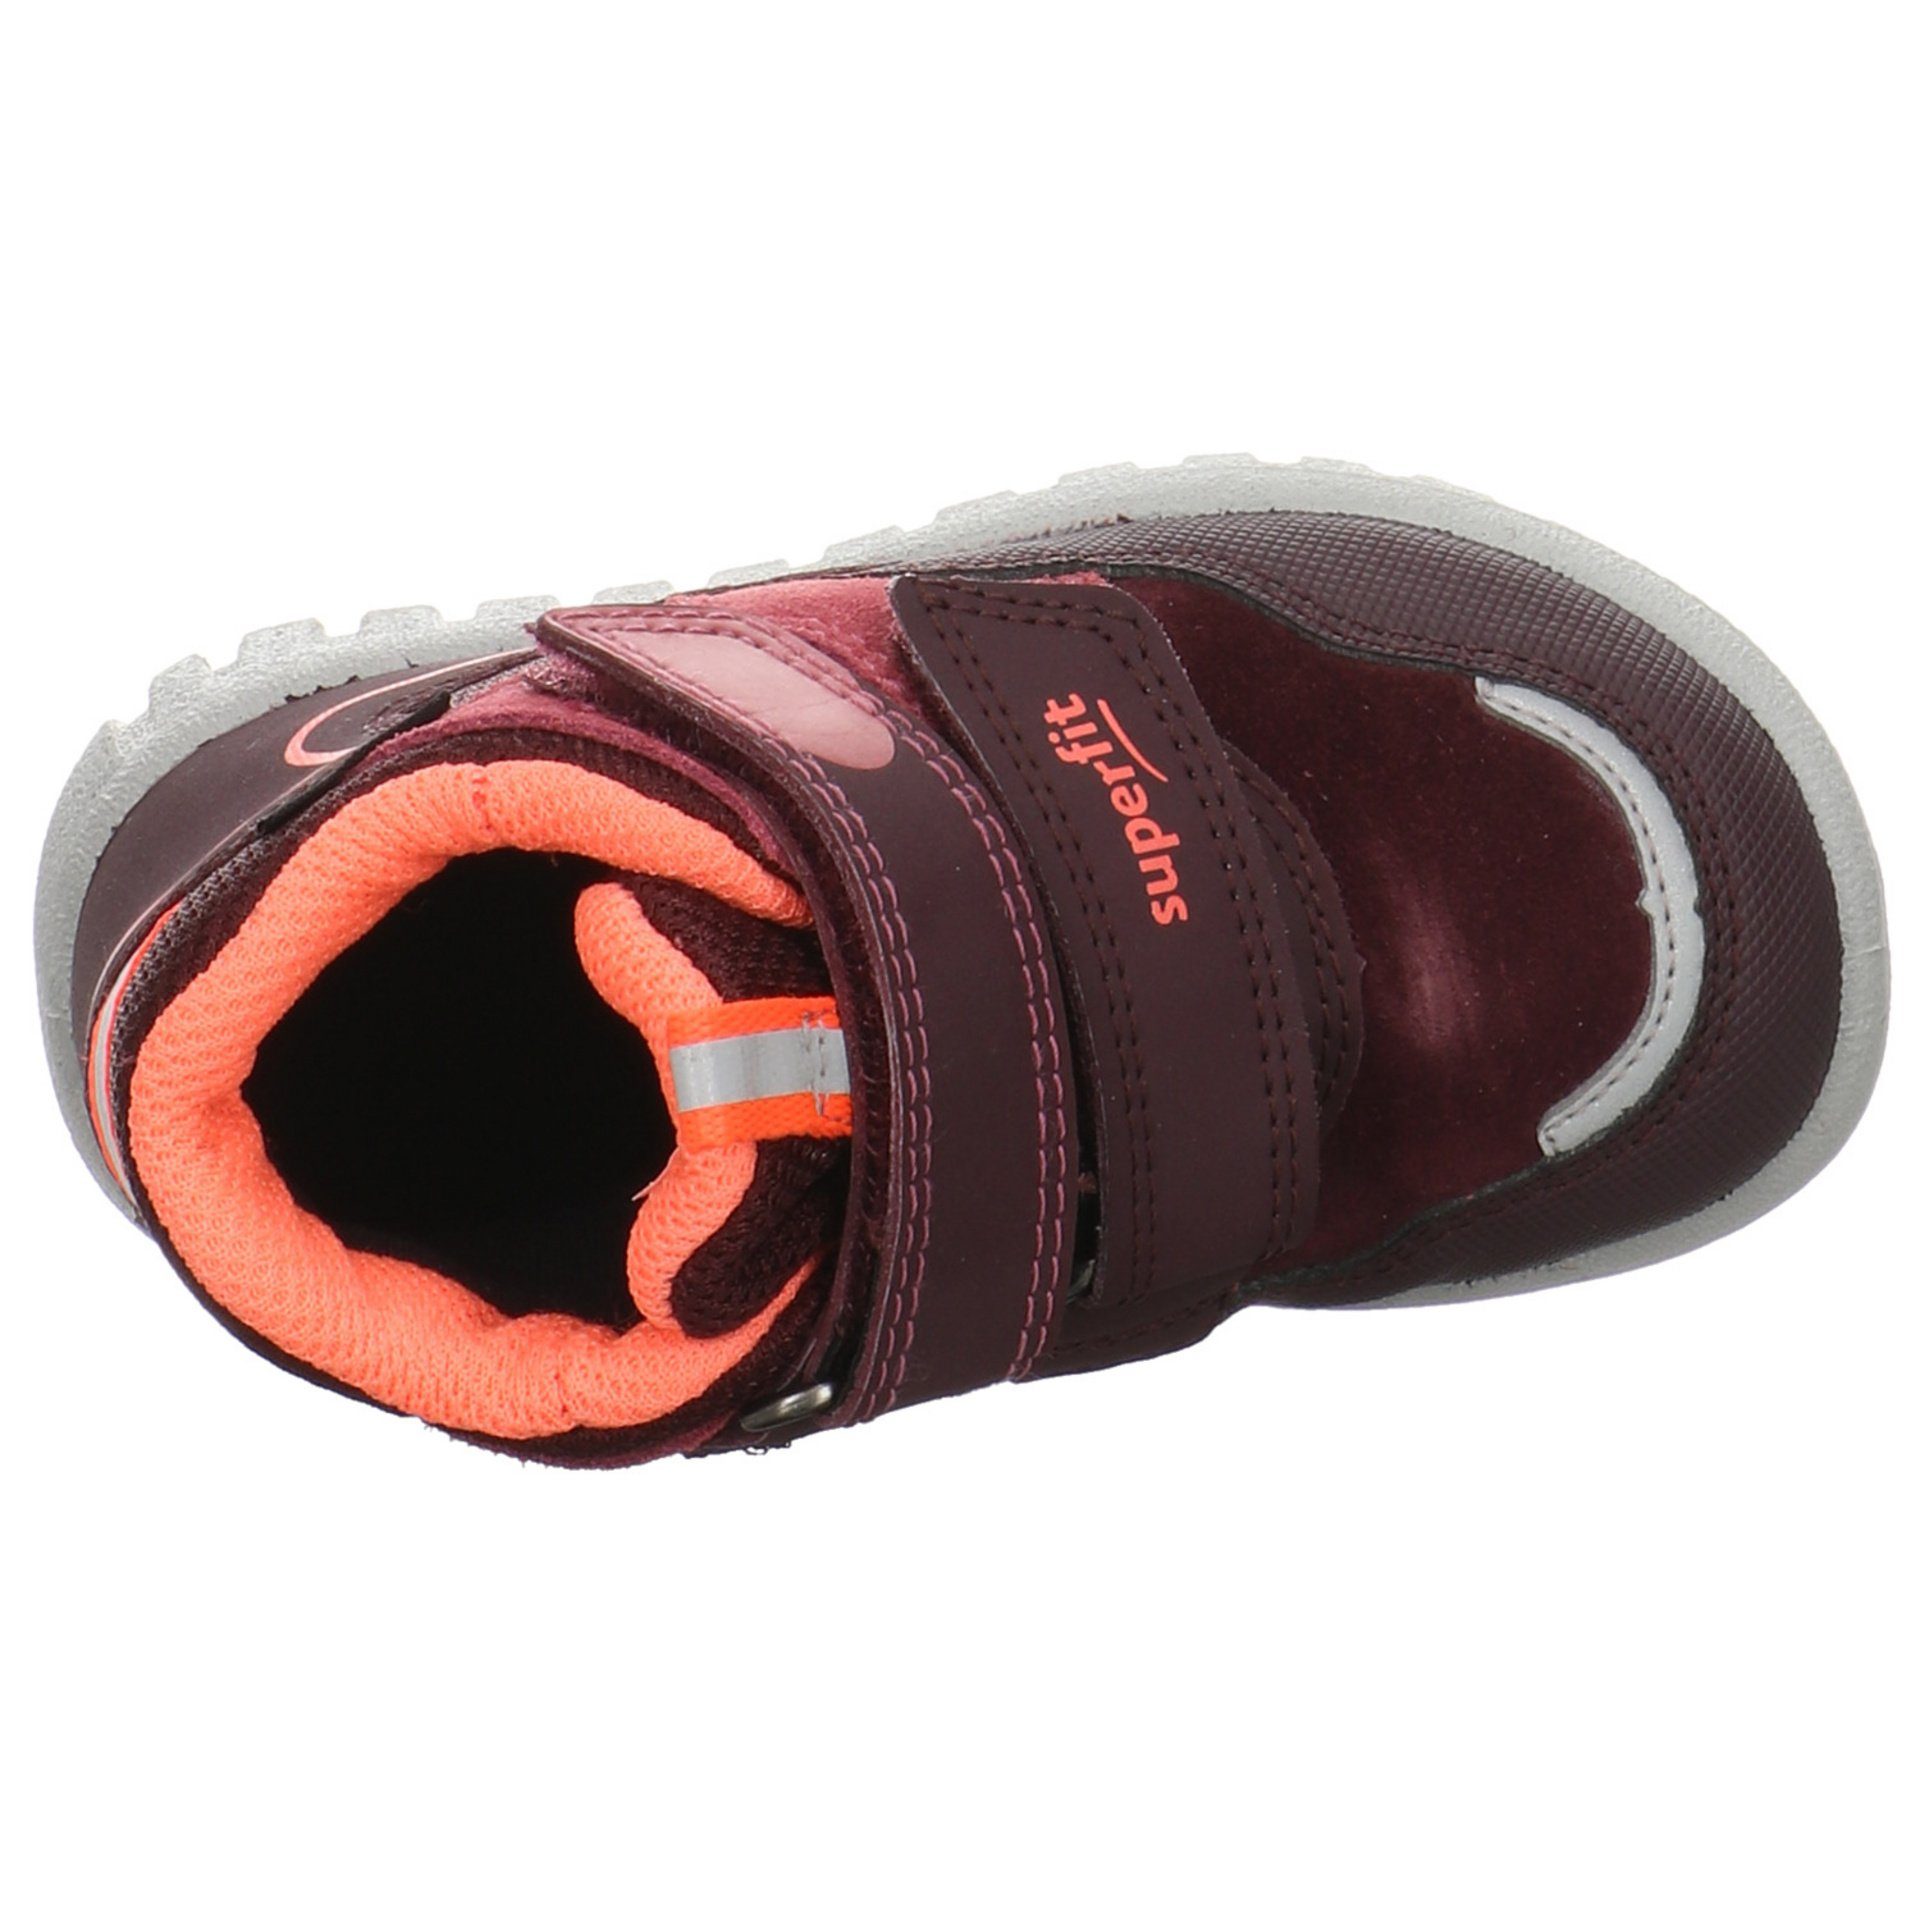 Superfit Sport 7 Mini Leder-/Textilkombination Klettschuh Klettschuh Leder-/Textilkombination sonst rot+lila Kombi